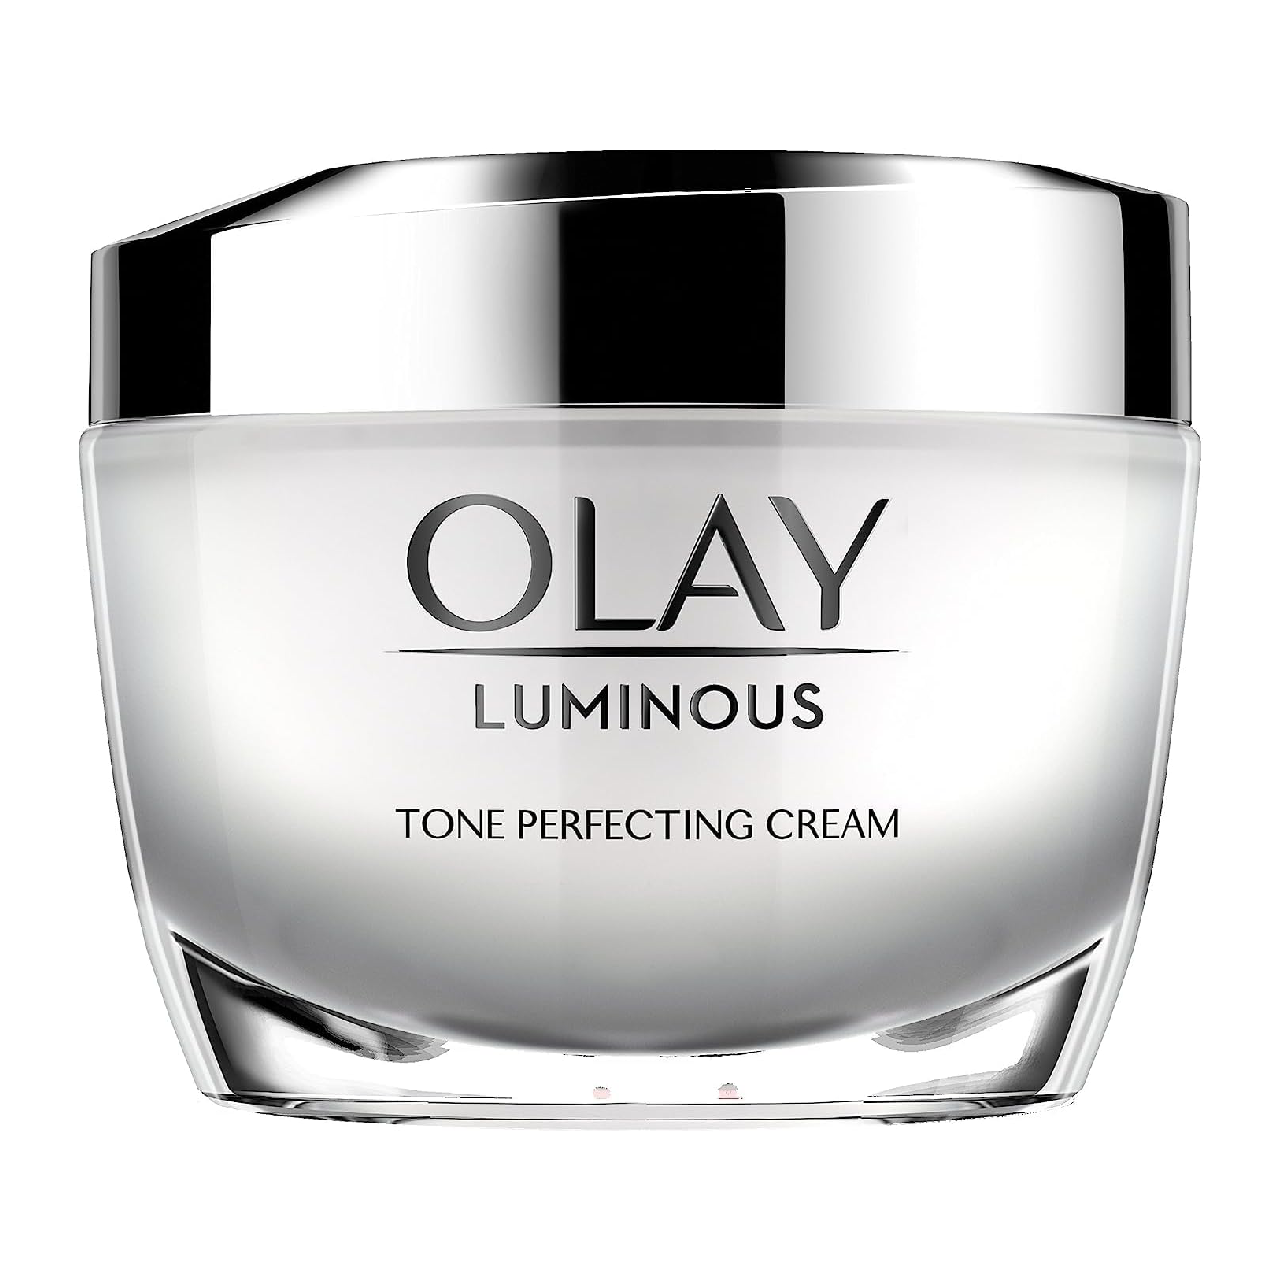 Jar of Olay Luminous Tone Perfecting Cream on a white background